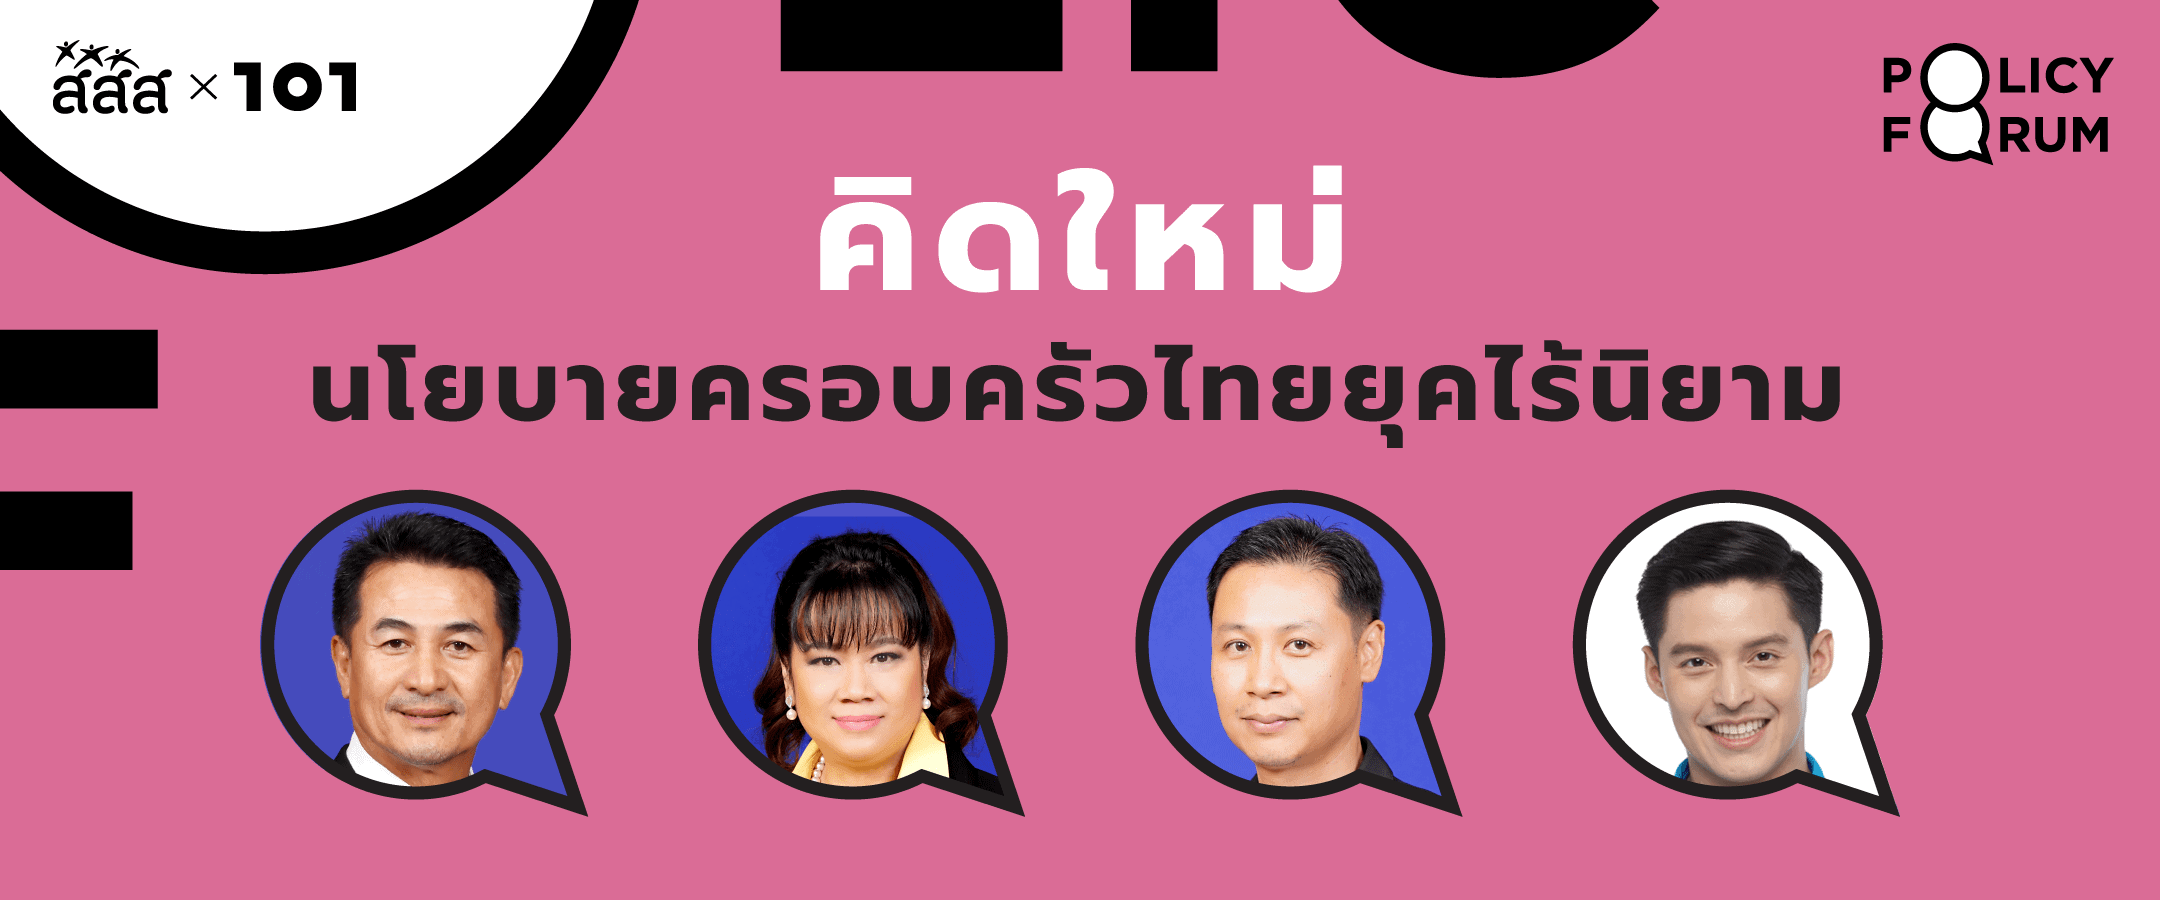 101 policy forum : คิดใหม่ นโยบายครอบครัวไทยยุคไร้นิยาม